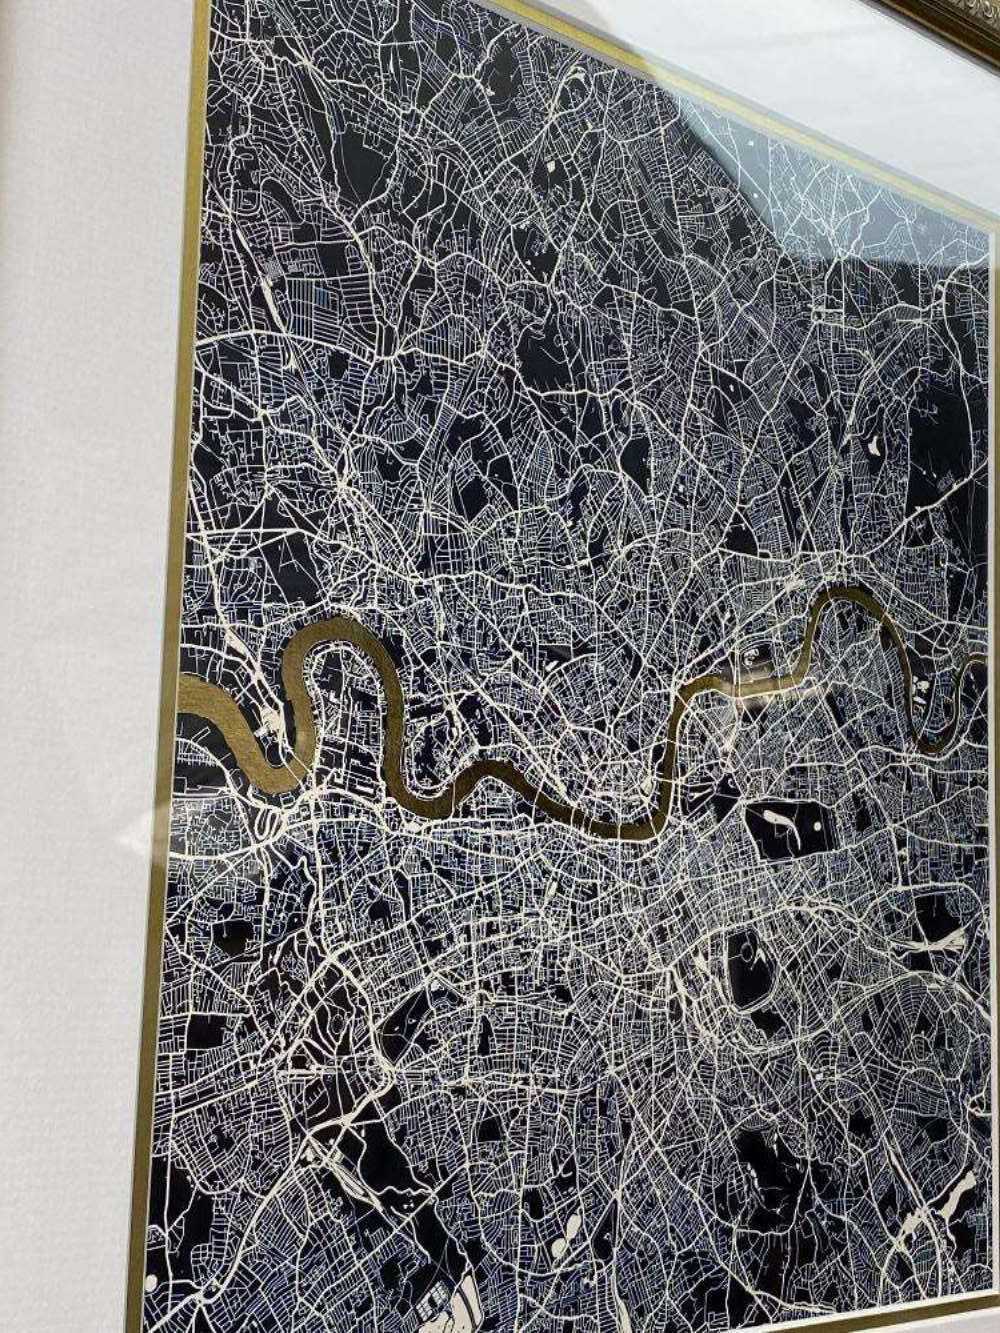 Stunning Gold Leaf River Thames-London Triptych Framed Ltd Edition of 30. - Image 10 of 10